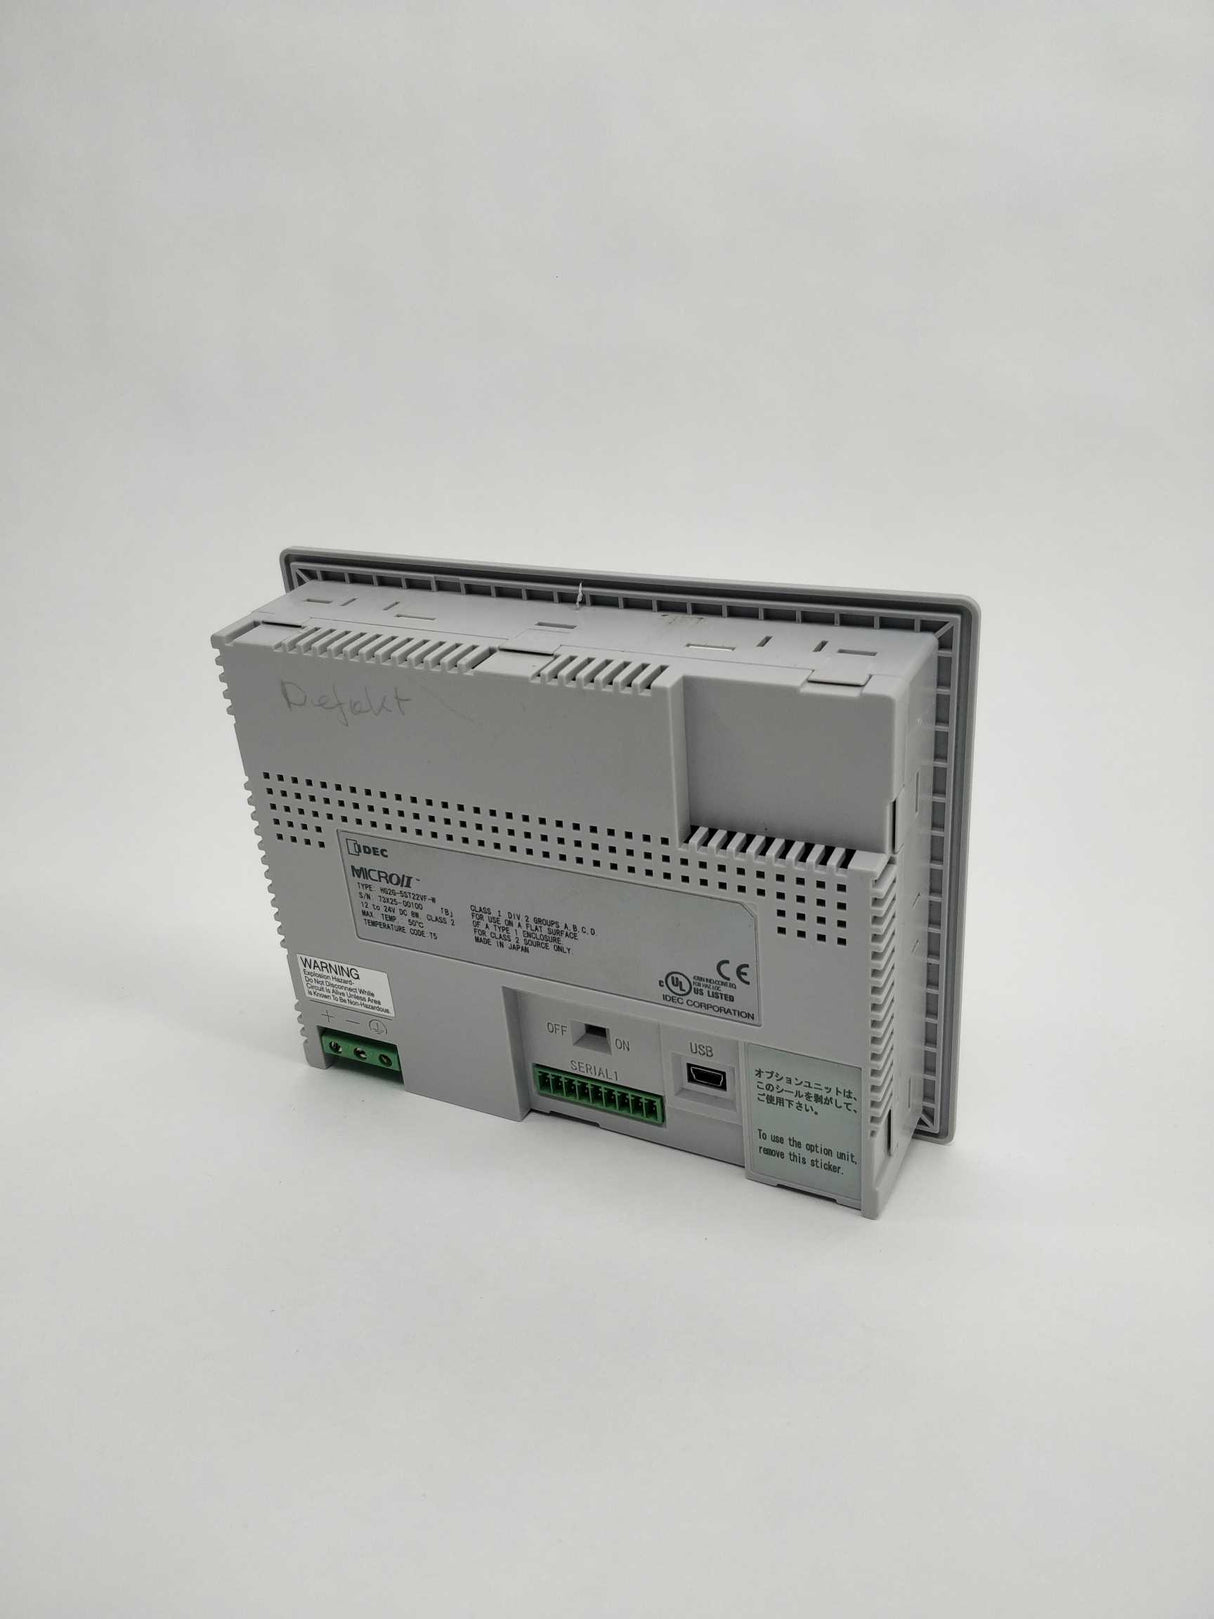 Idec HG2G-5ST22VF-W Programmable display